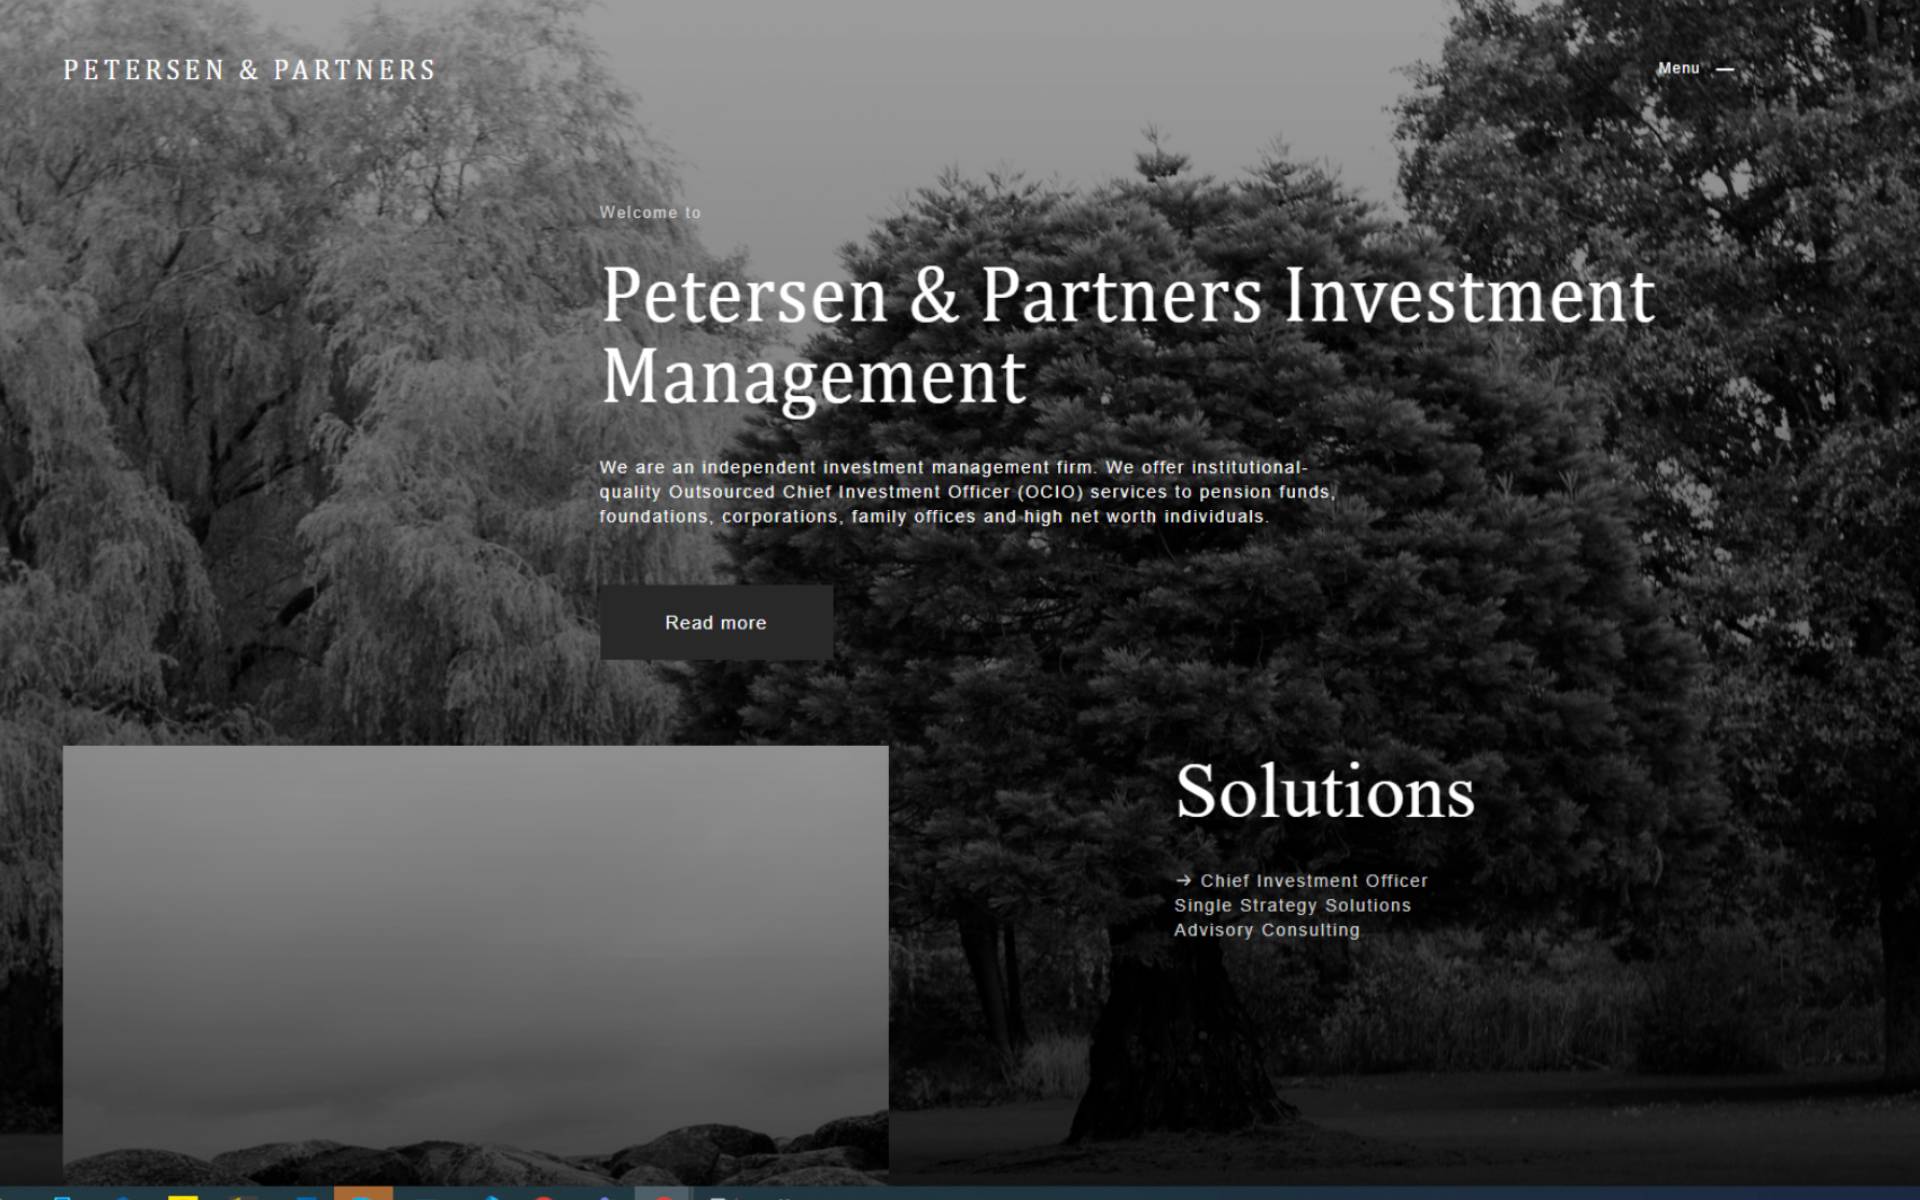 Petersen & Partners landing page